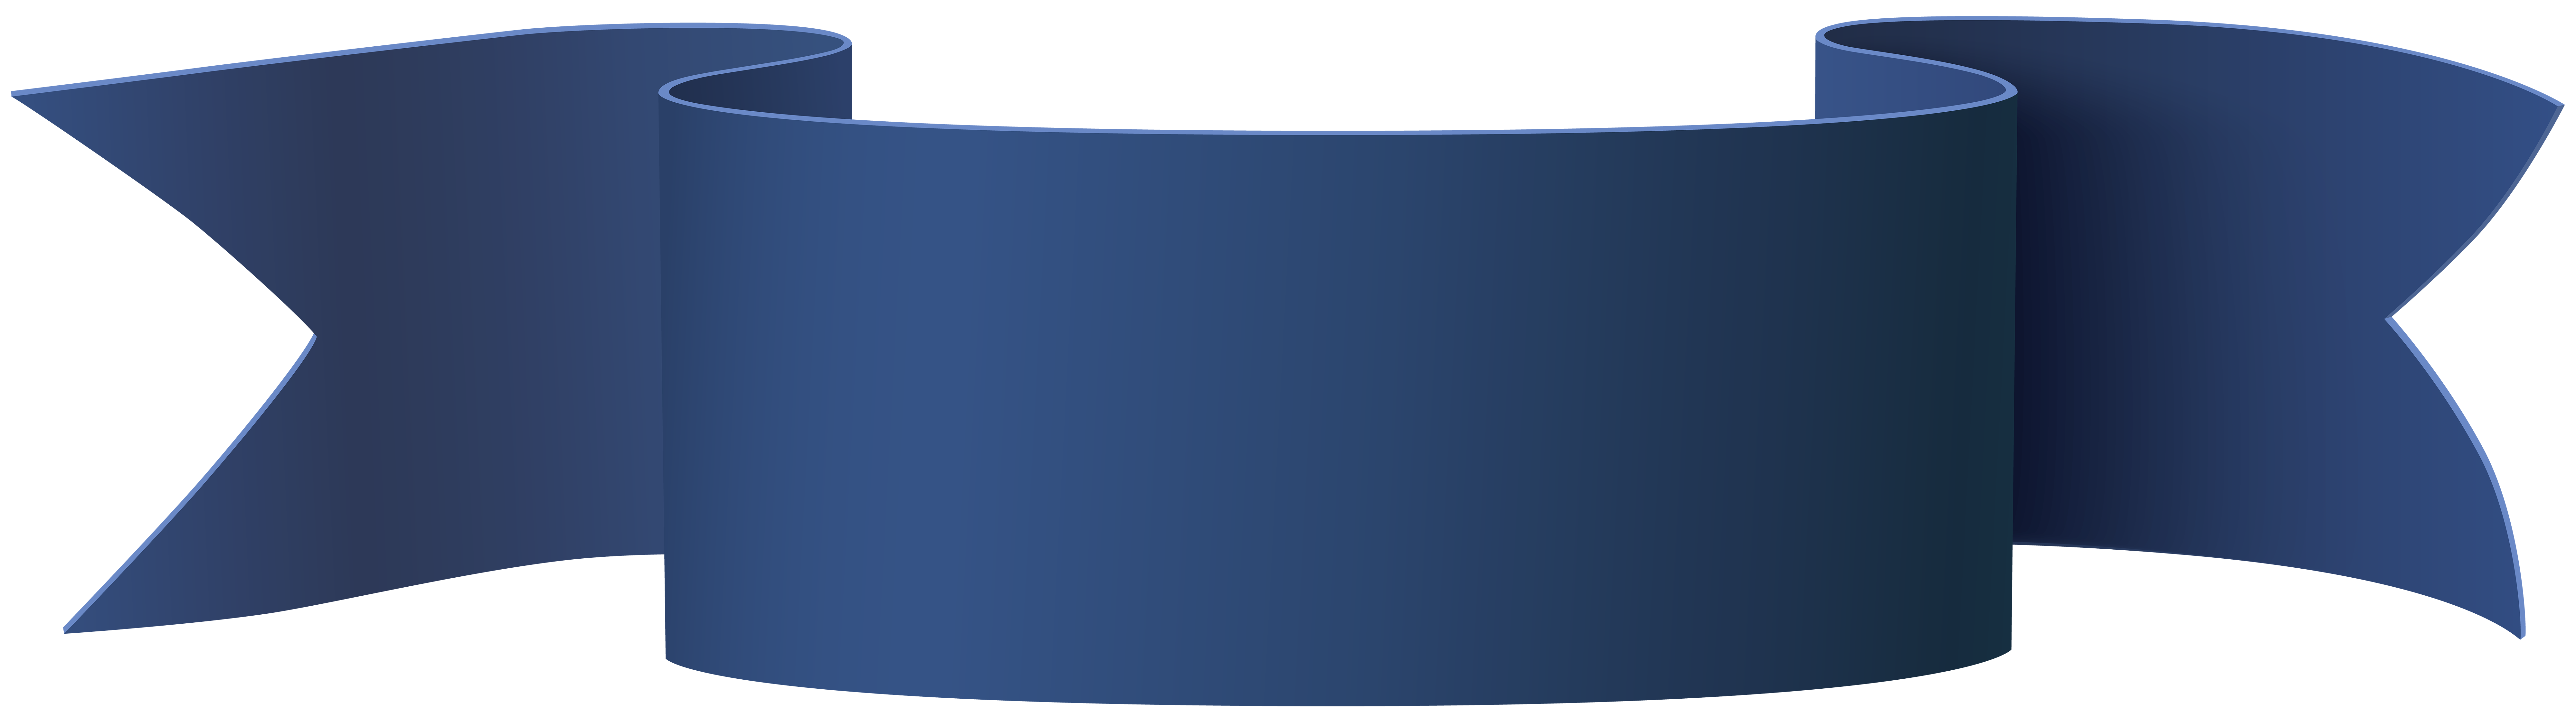 clipart banner blue